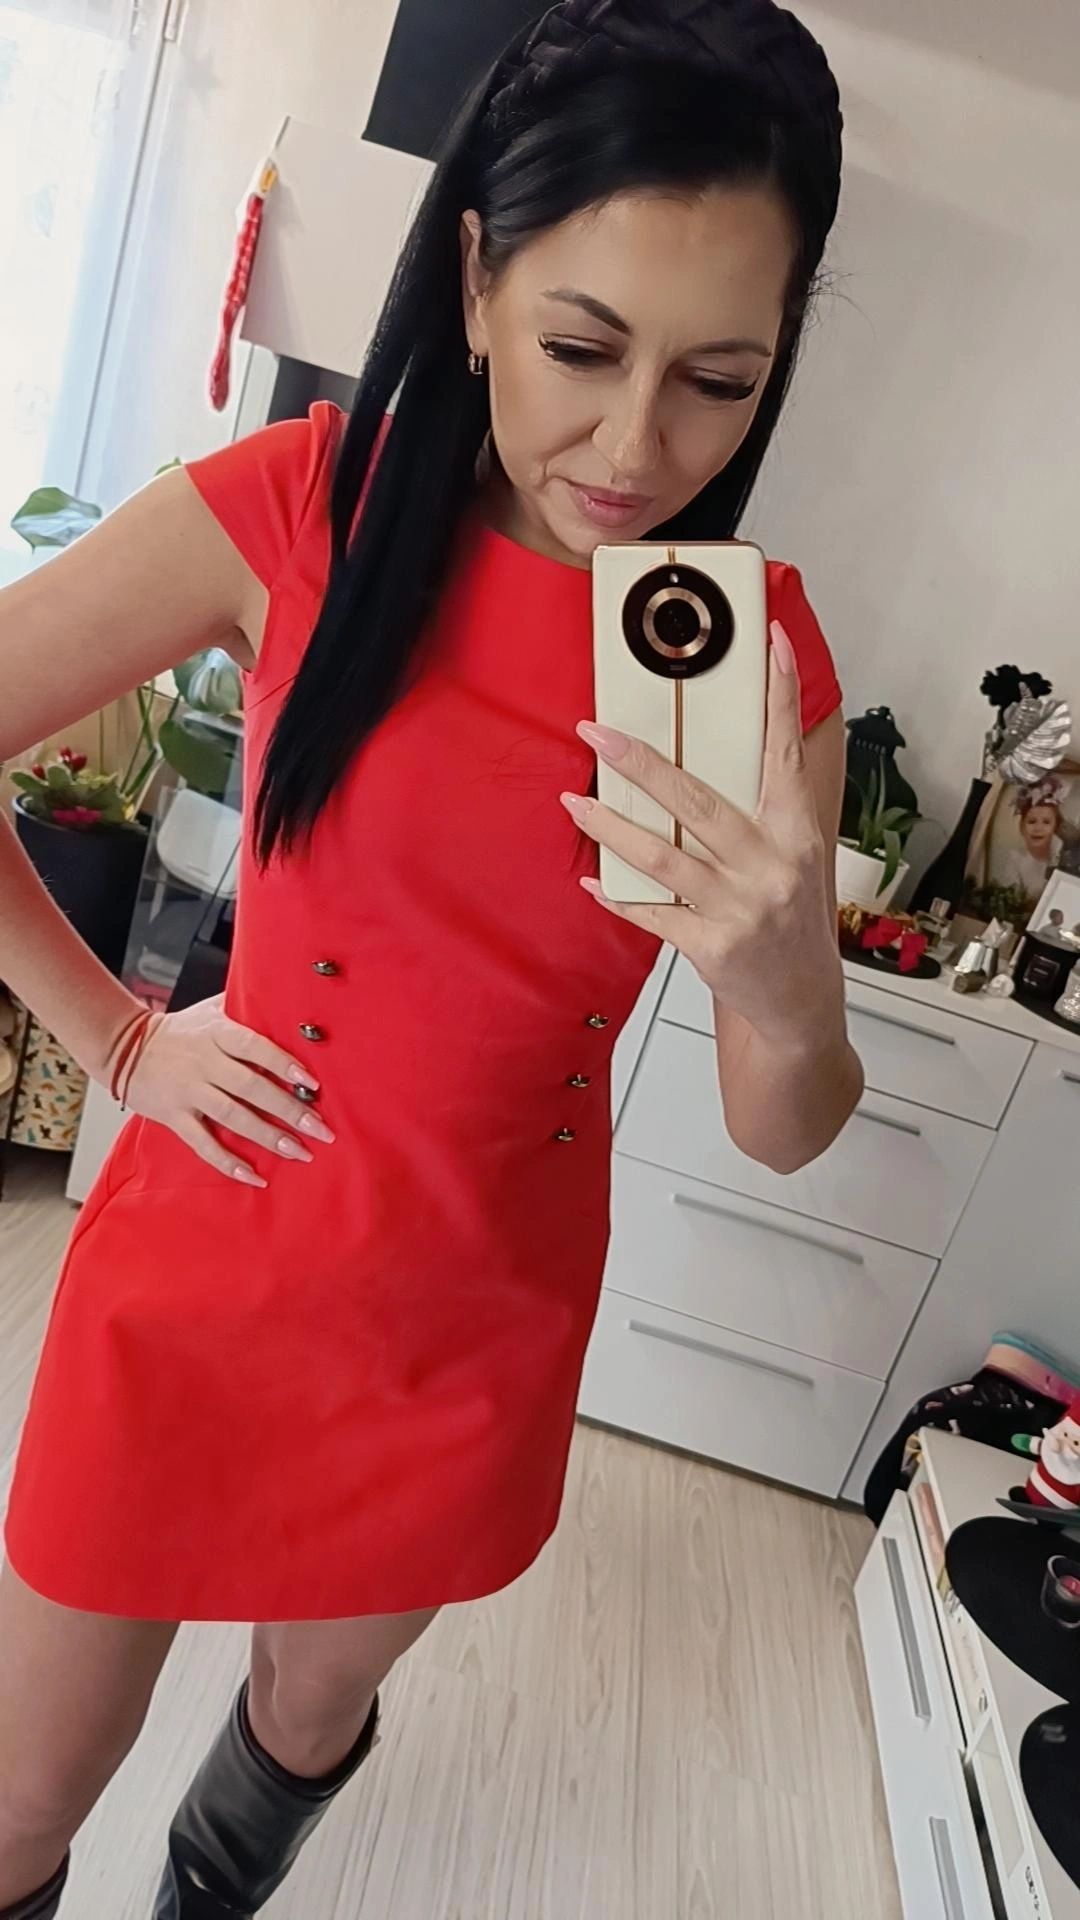 Czerwona elegancka sukienka Orsay święta chrzciny sylwester studniówka